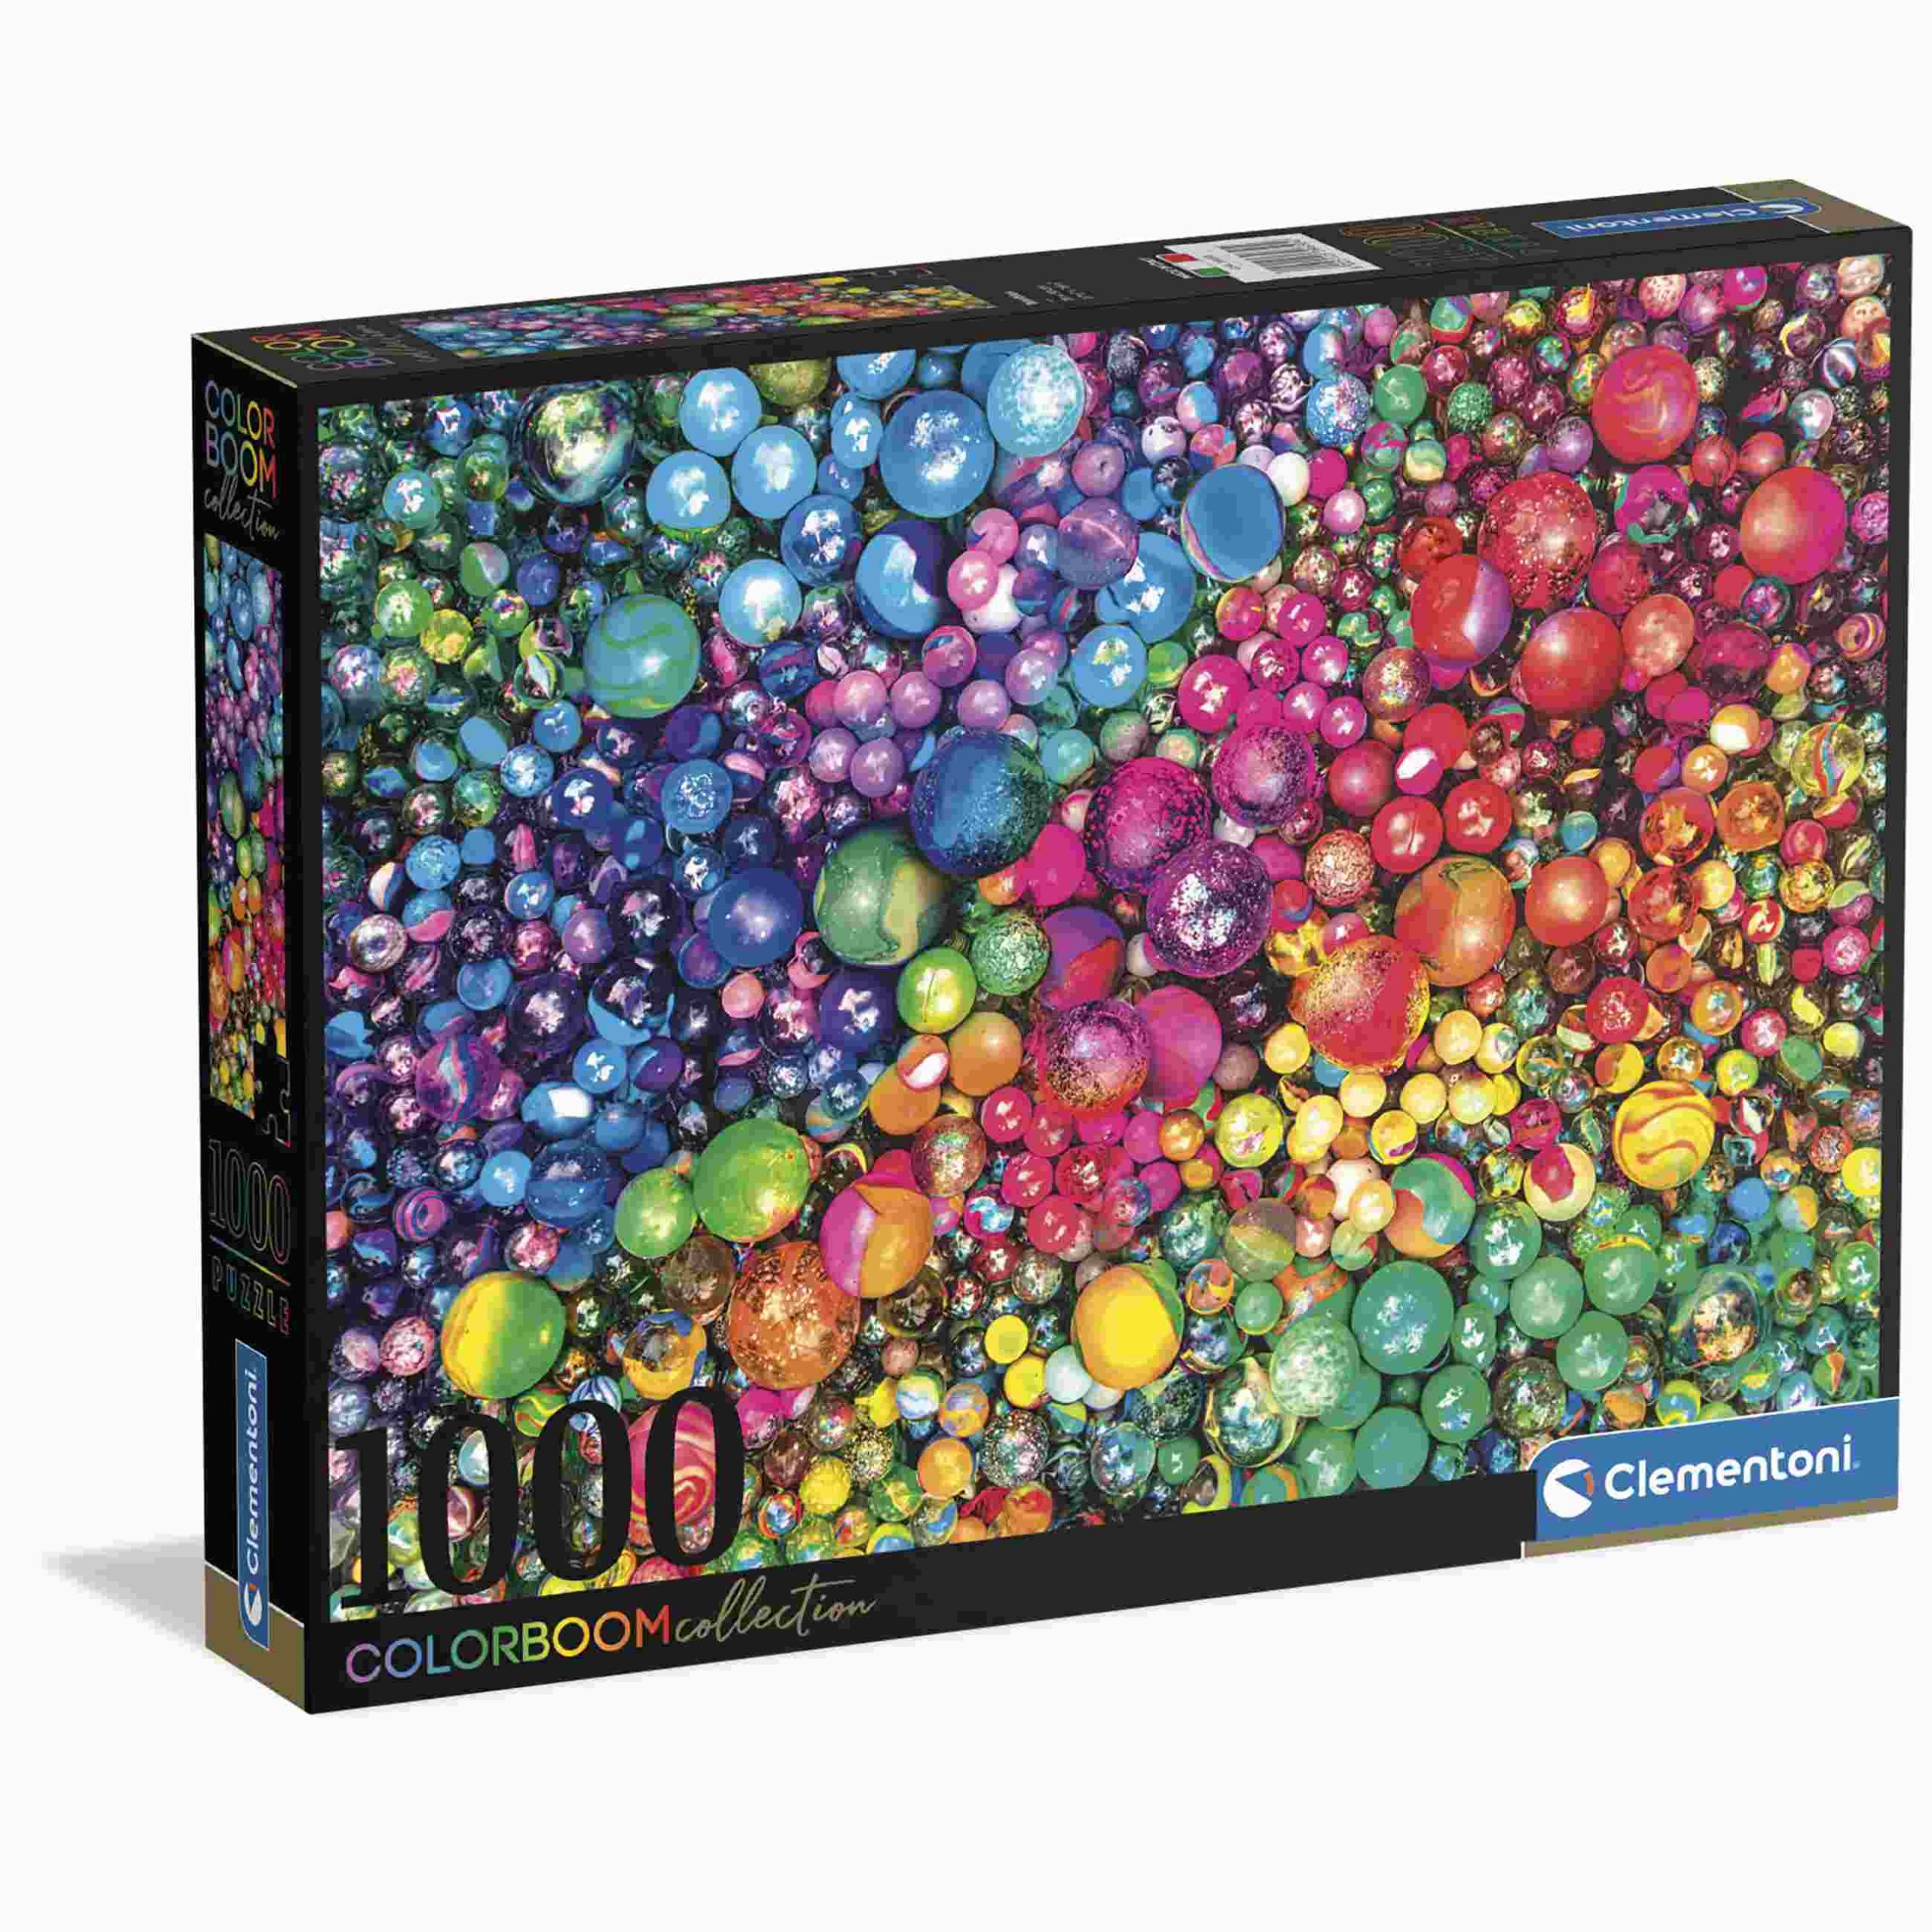 Clementoni - colorboom collection - marbles - 1000 pezzi - CLEMENTONI